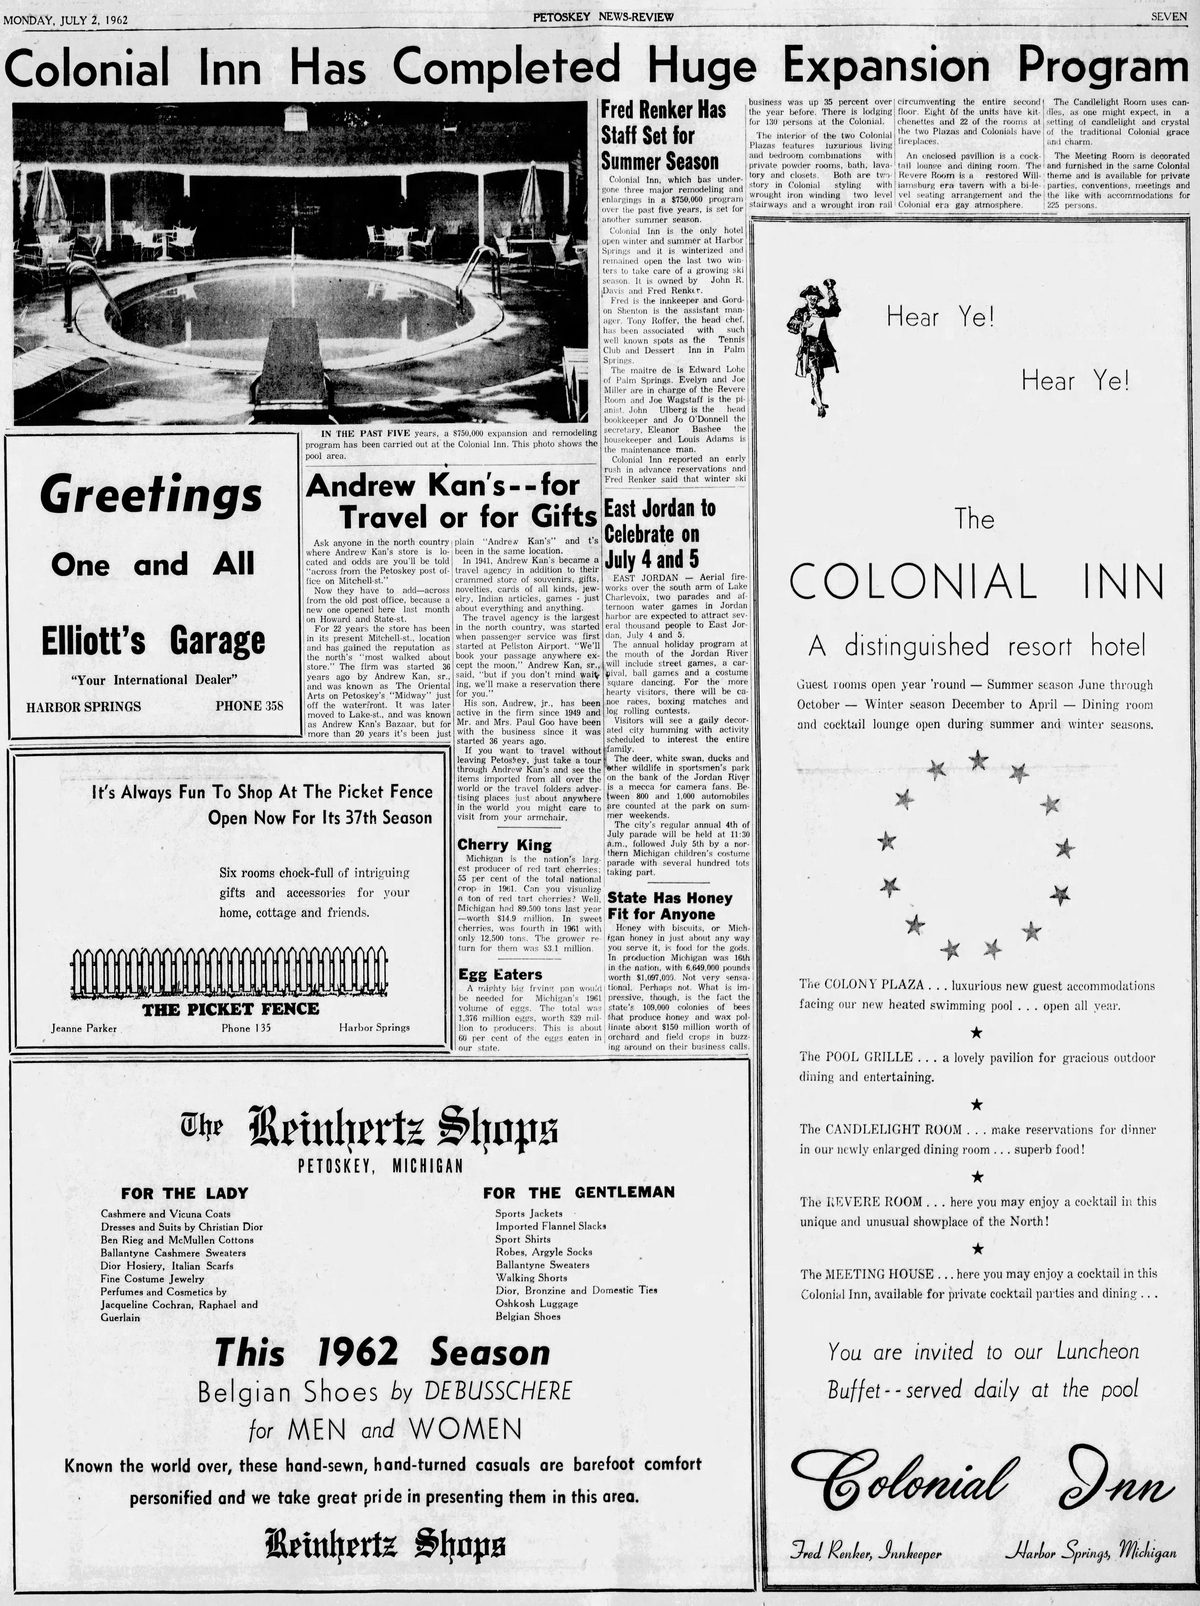 Colonial Inn - Jul 2 1962 Article